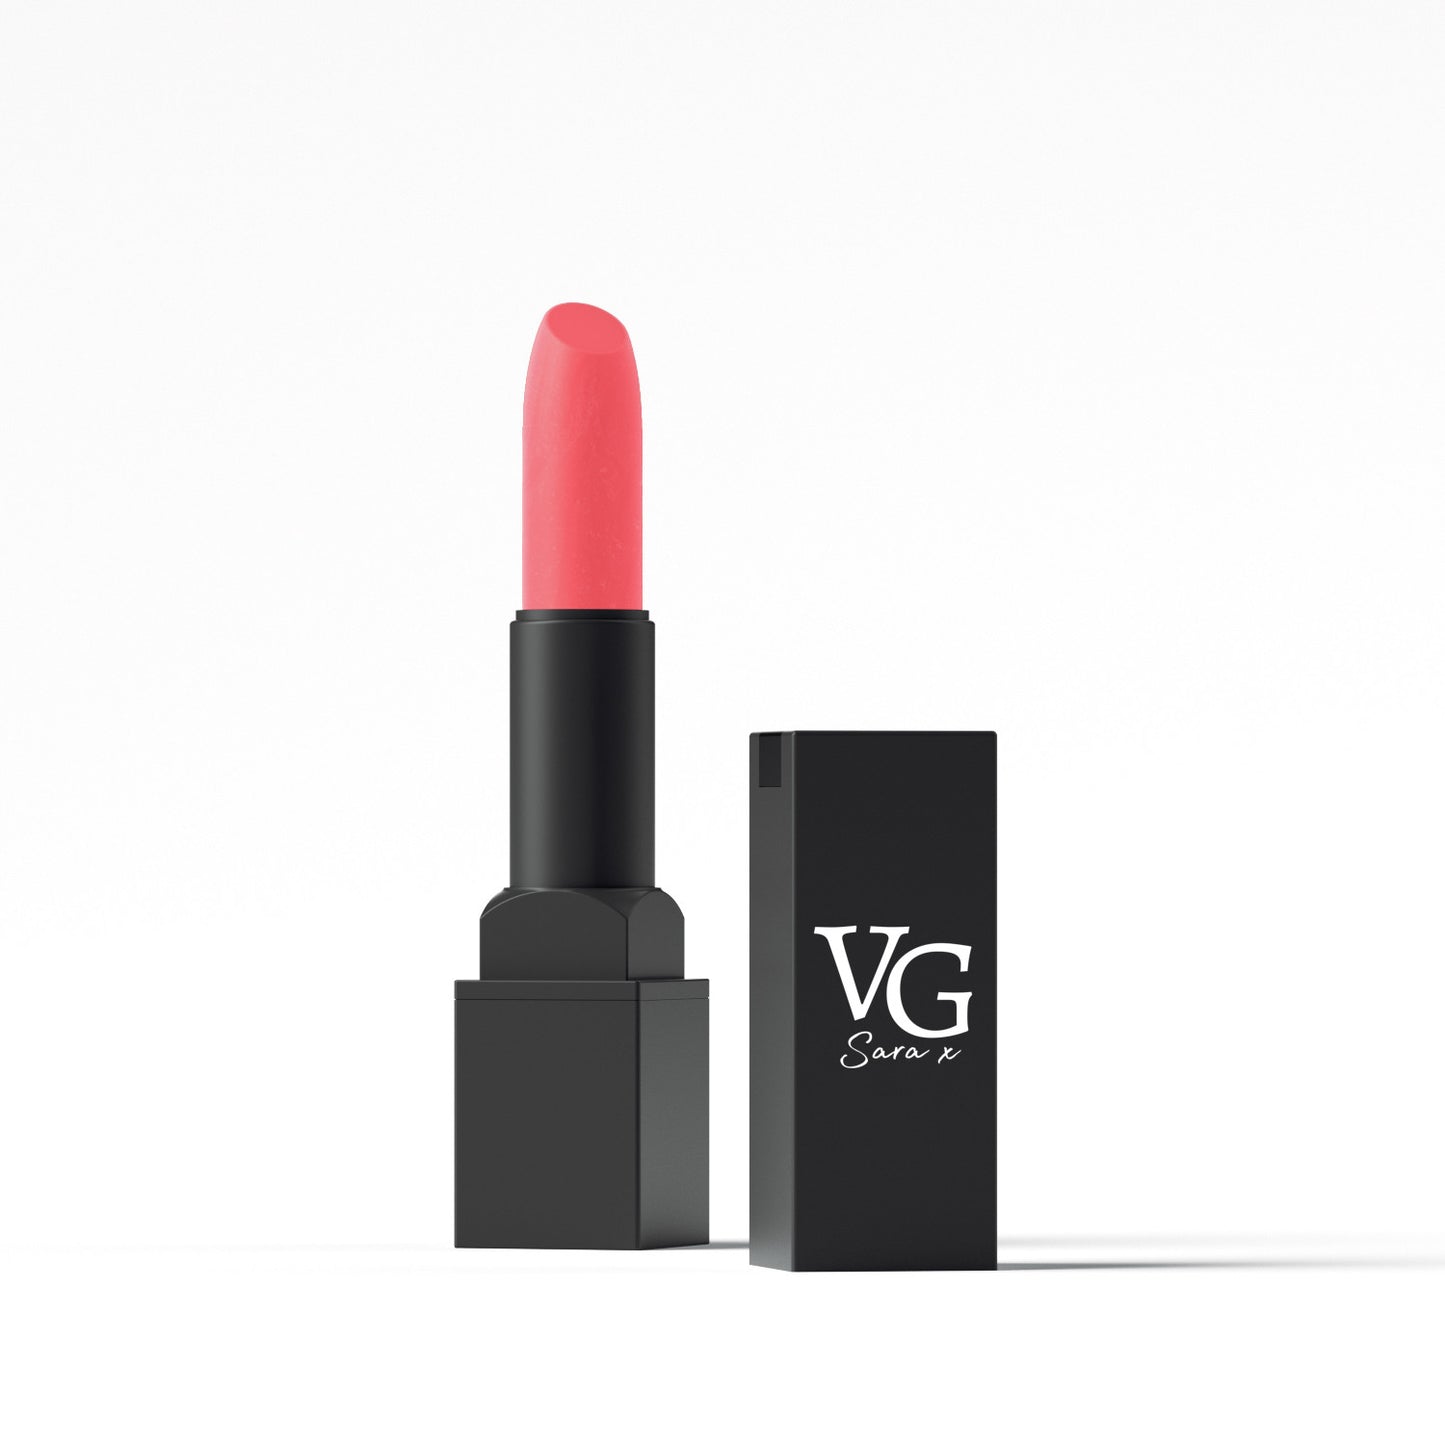 VG Cosmetics red-rose lipstick presented with its elegant black box